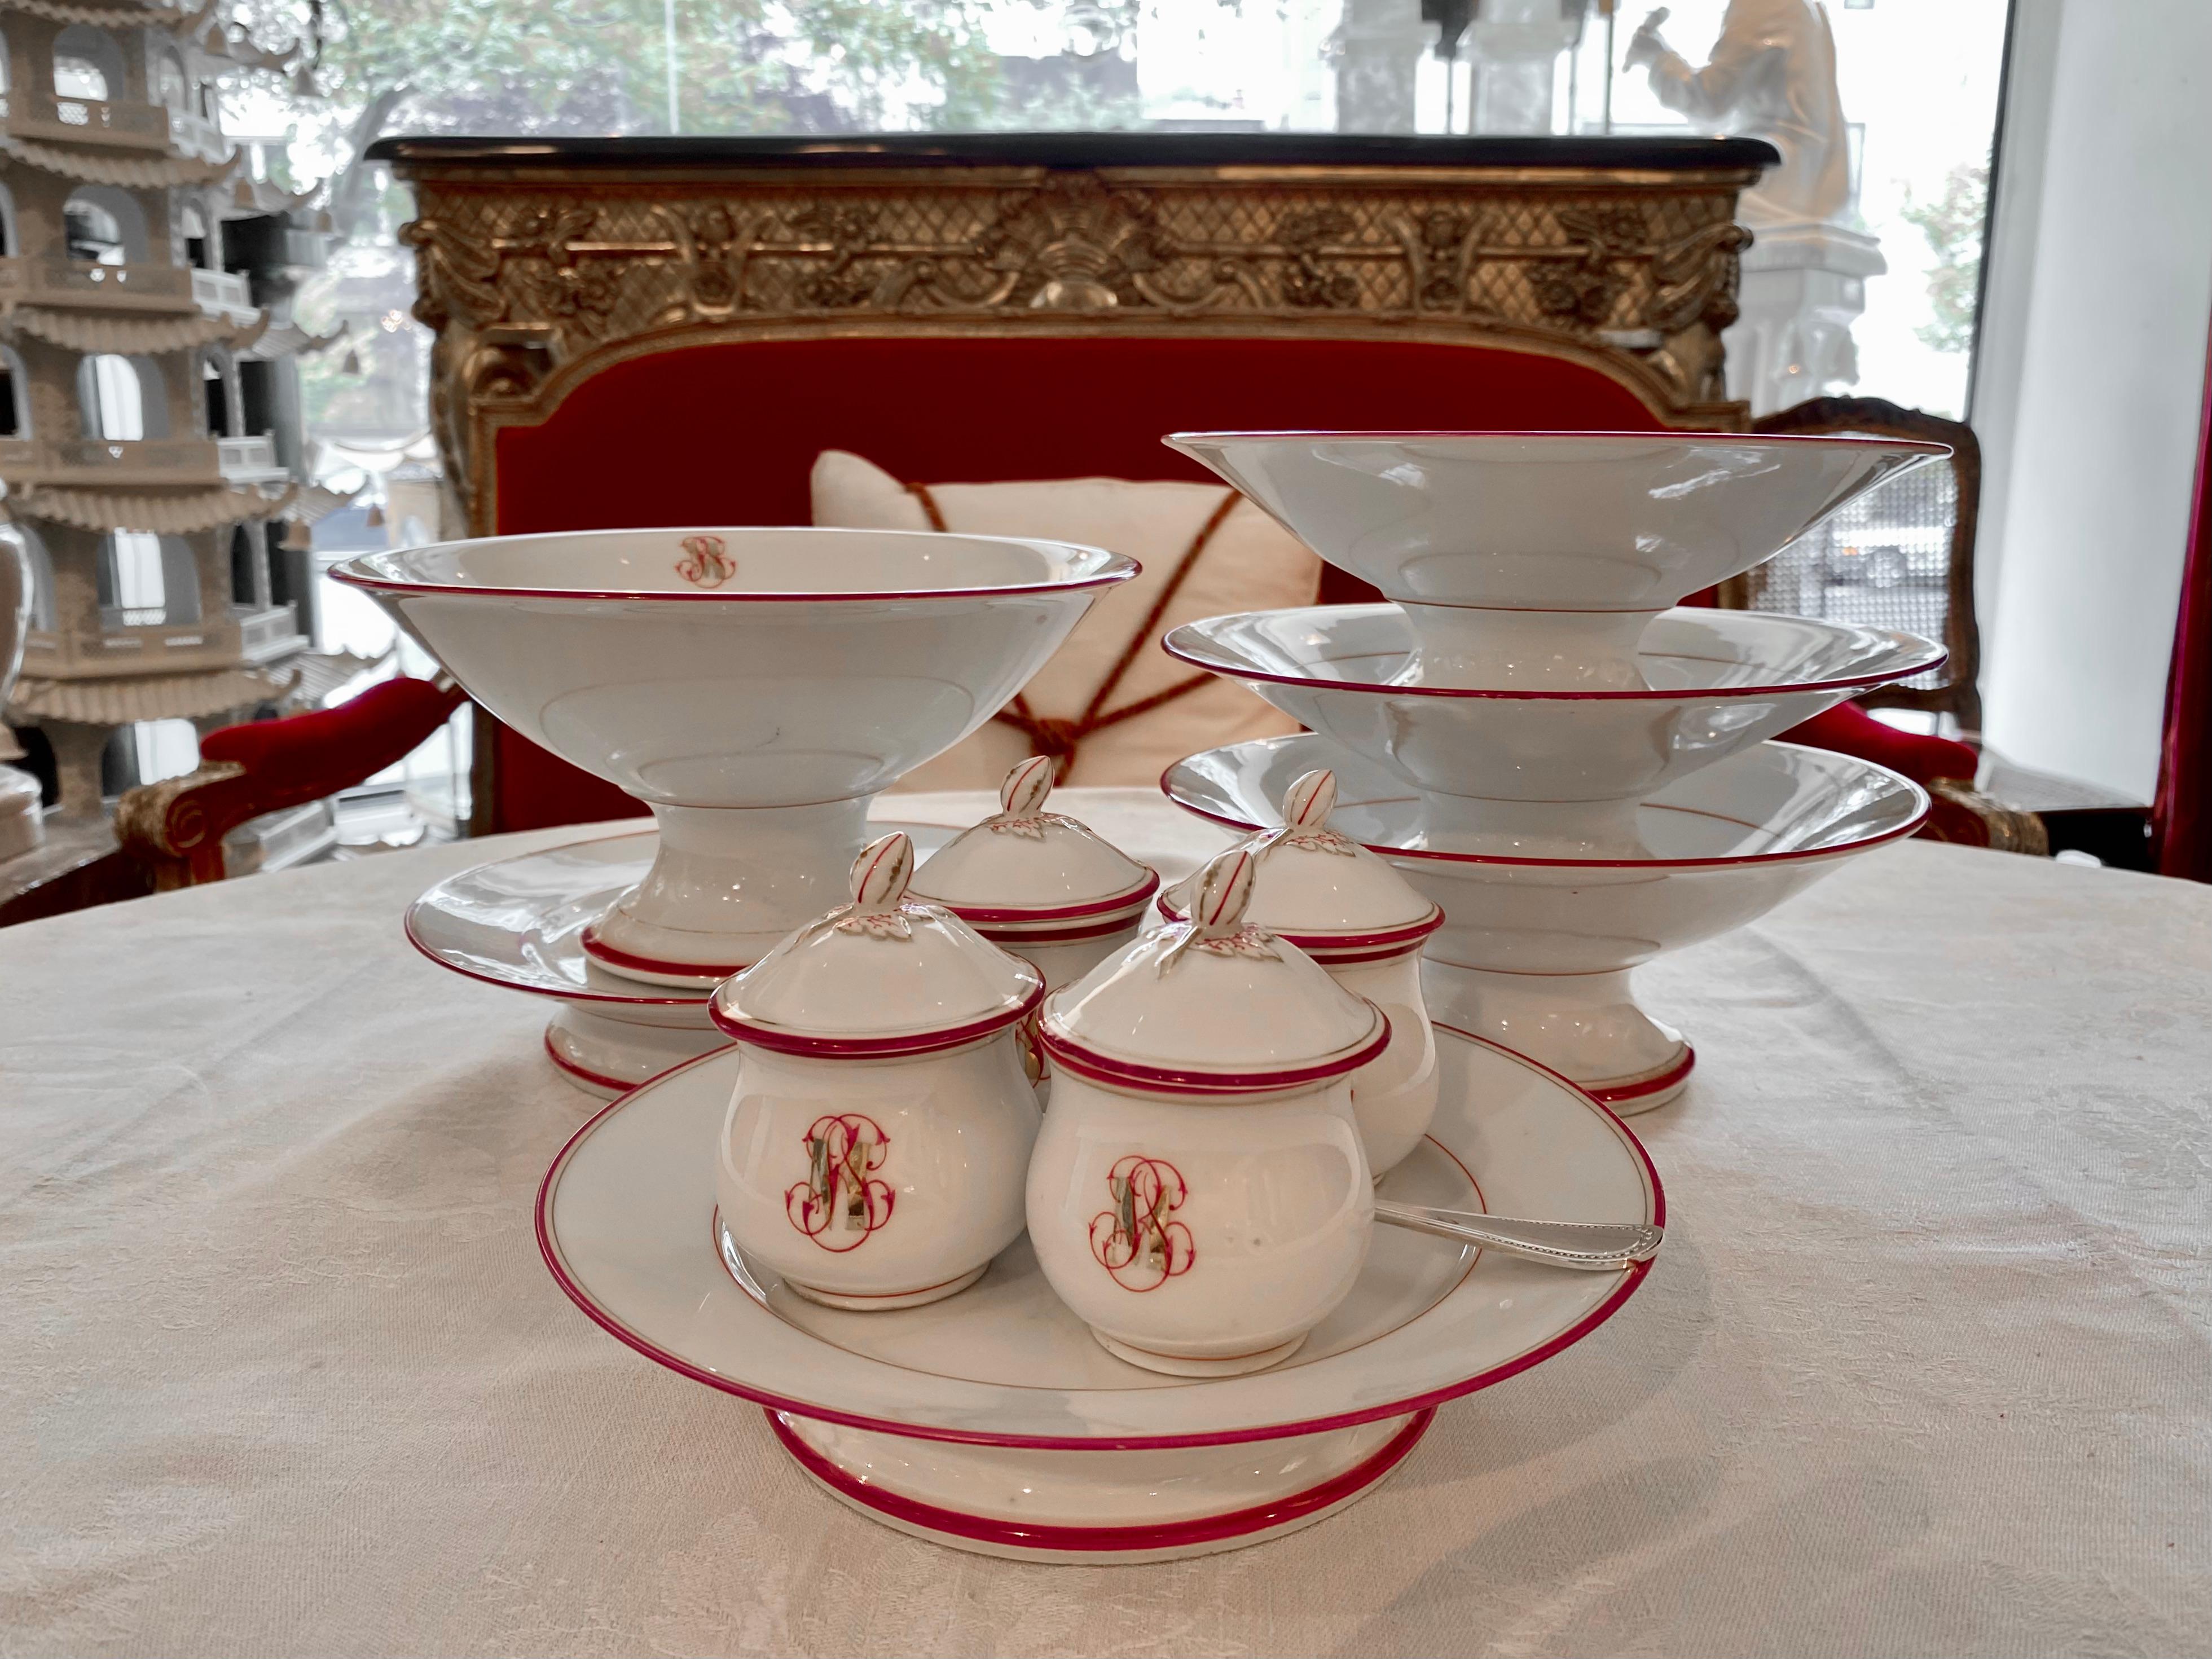 Magnificent French Antique Porcelain 116-Piece Dinner Set, 19th Century For Sale 1